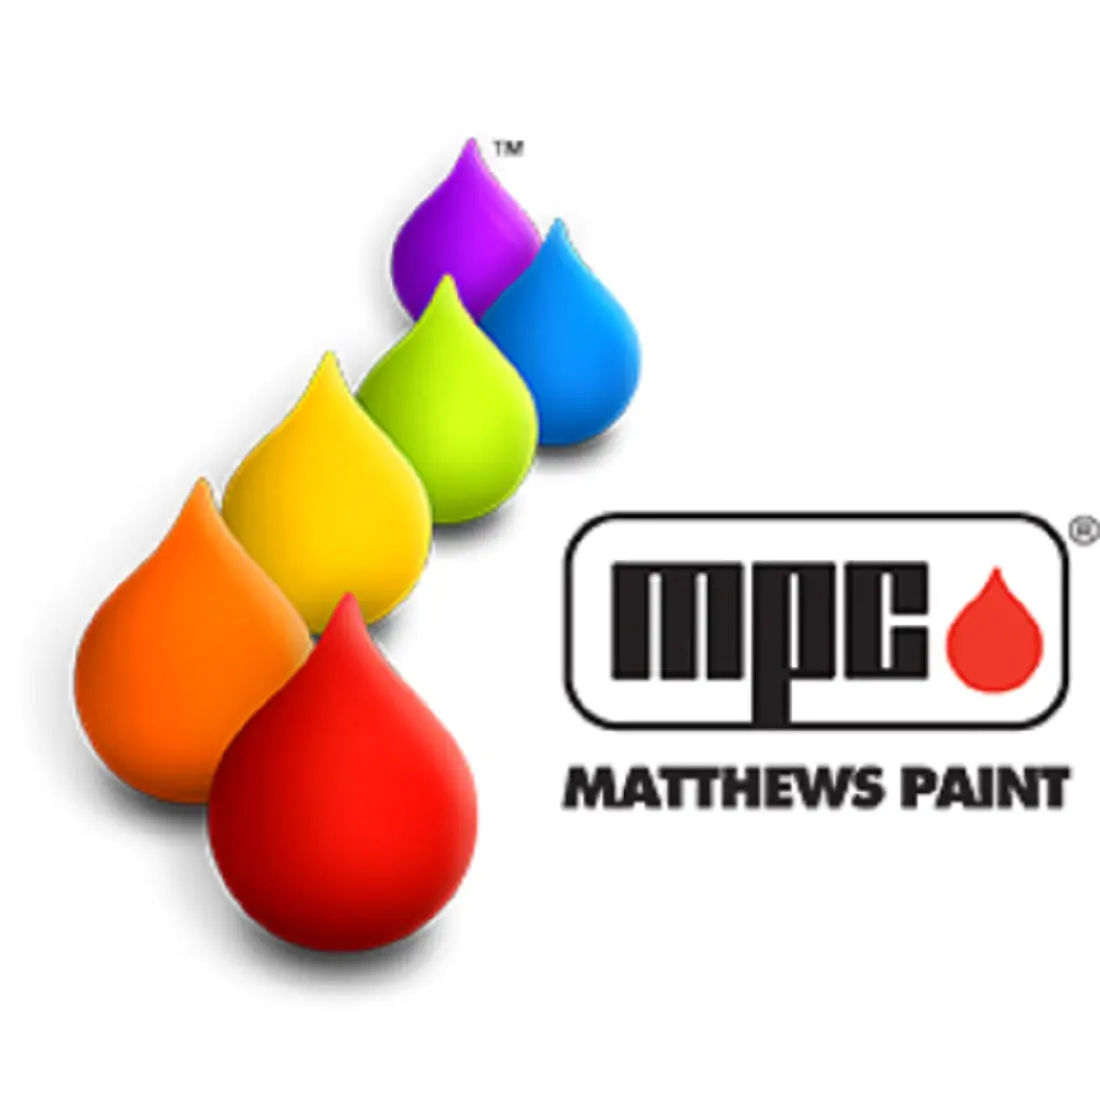 Matthews paint logo